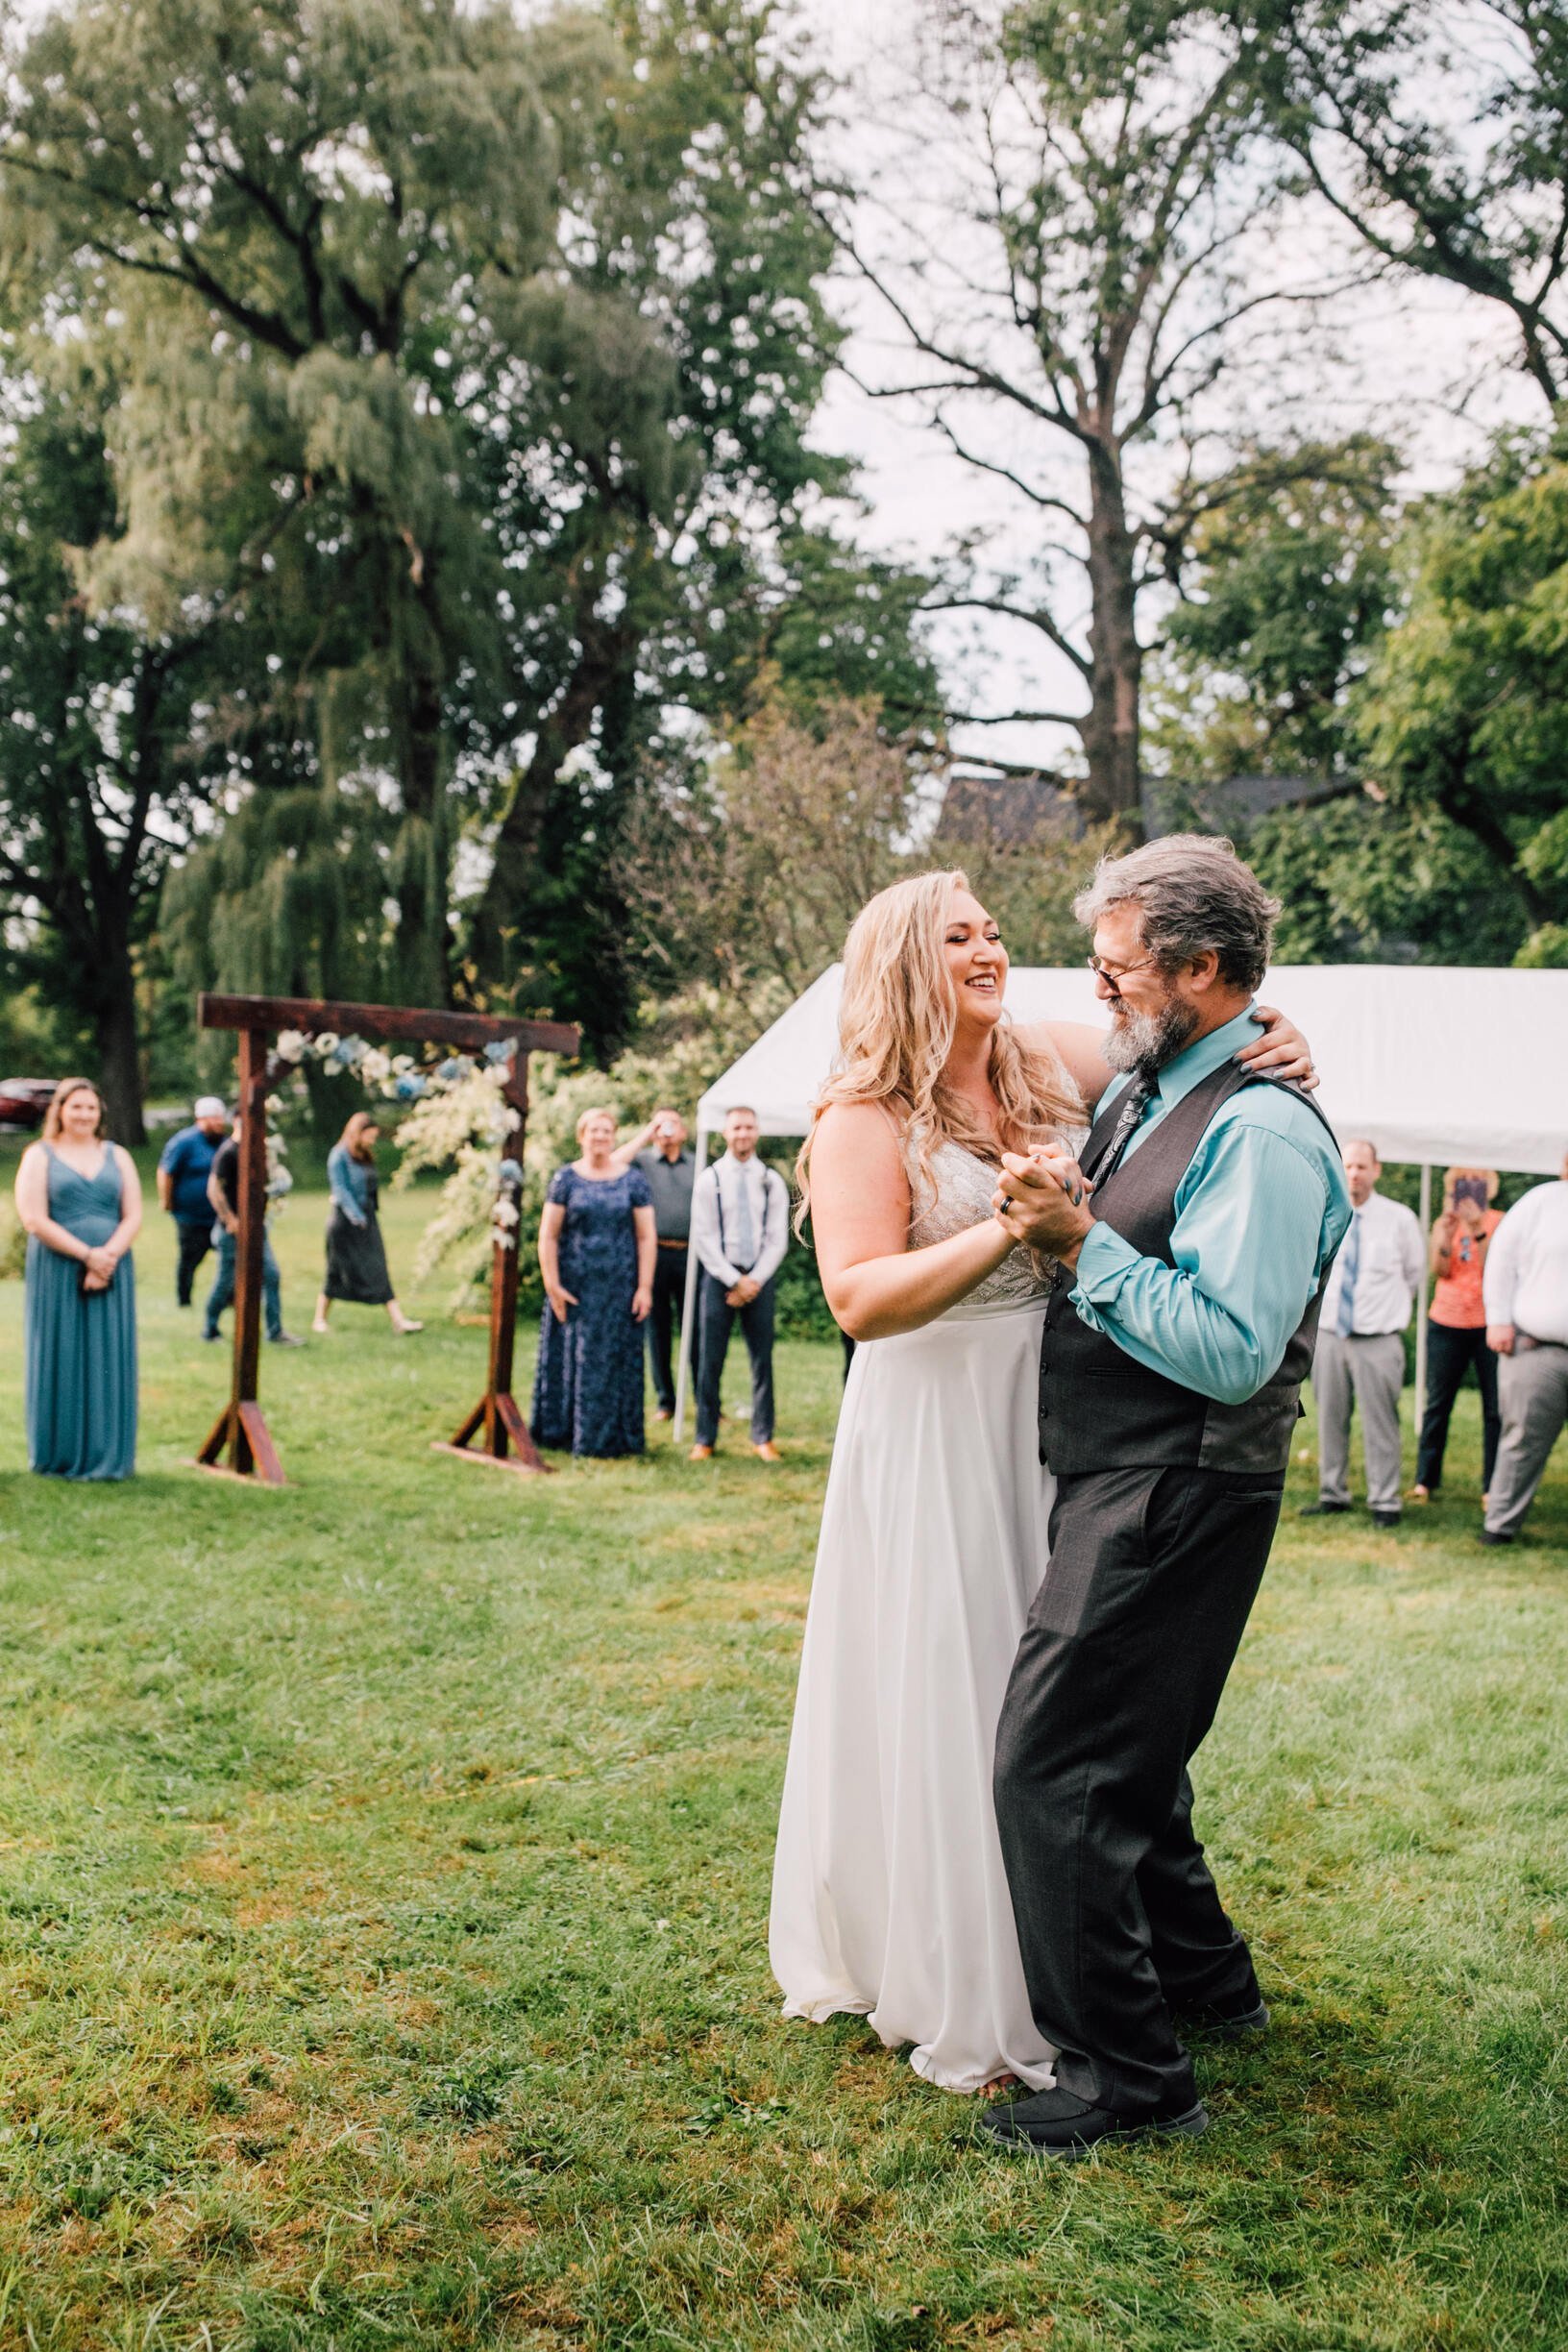  Father daughter dance at a backyard wedding reception 